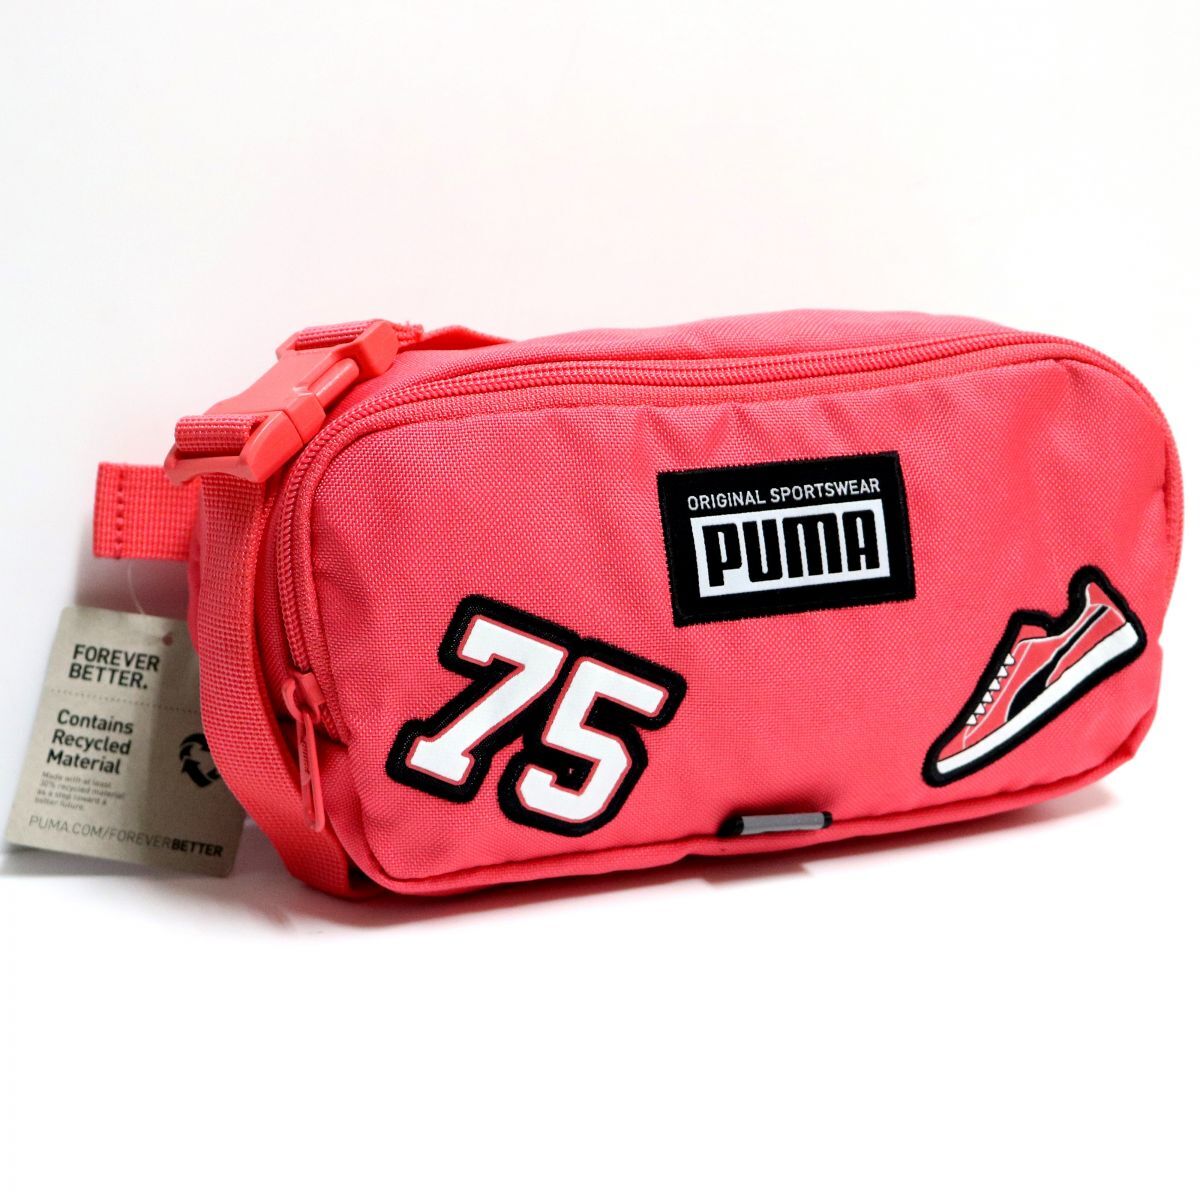 * Puma PUMA new goods patch body bag belt bag Day Pack bag BAG bag bag [079515031N] six *QWER*